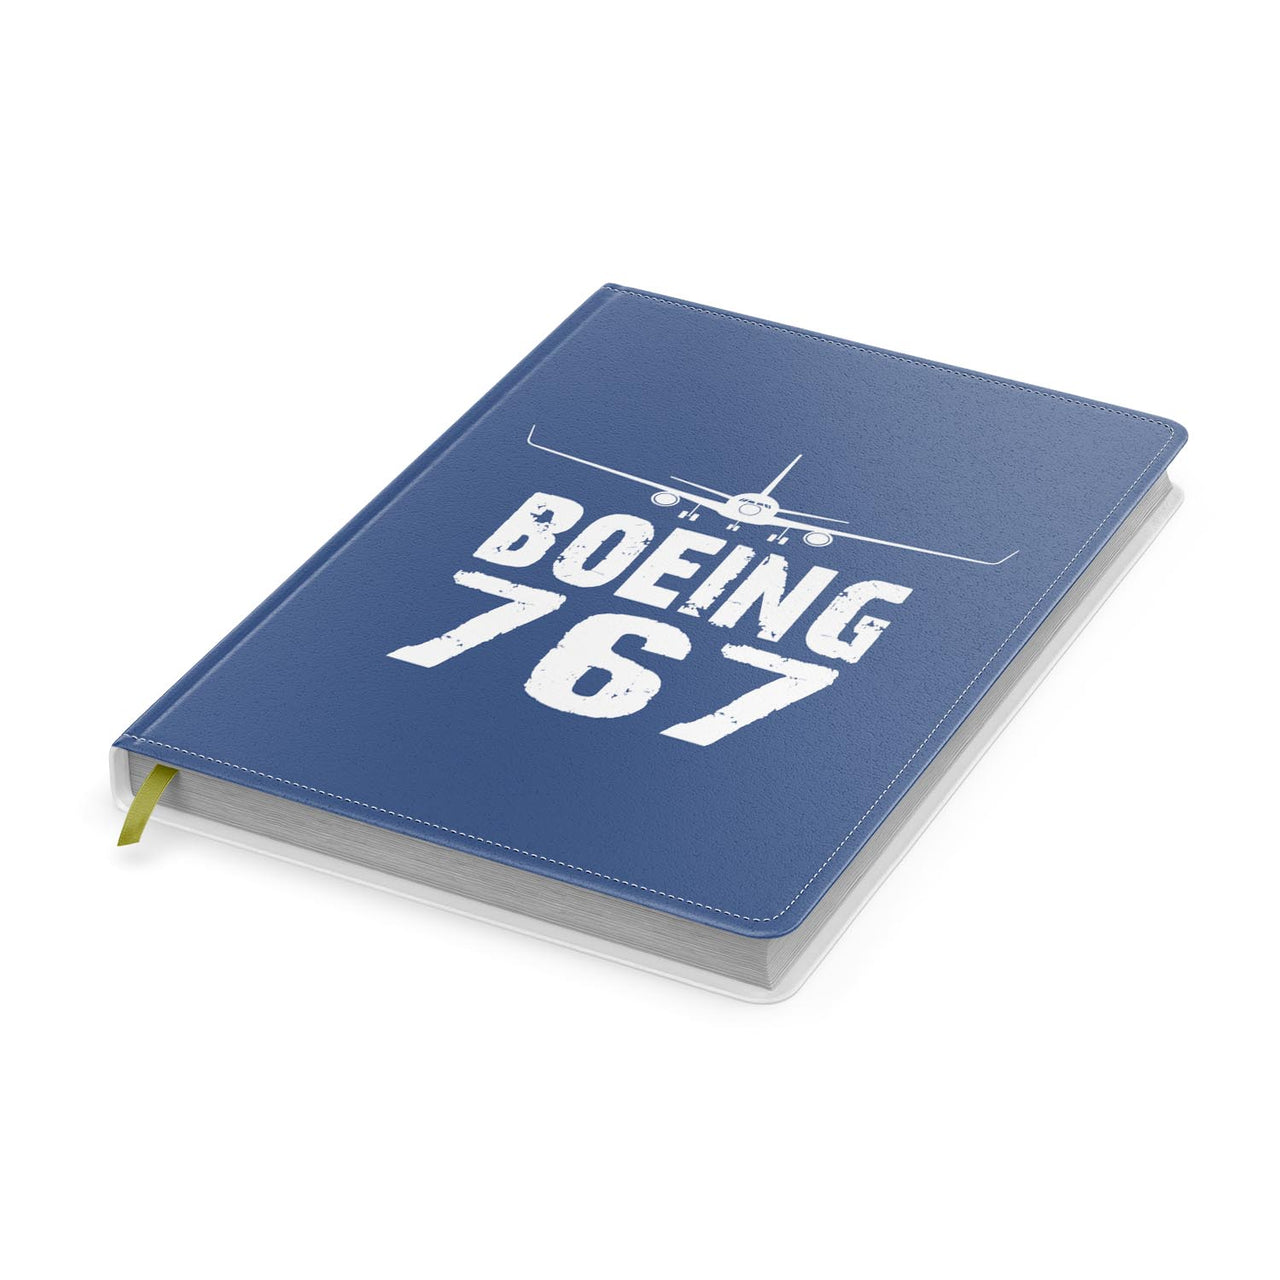 Boeing 767 & Plane Designed Notebooks